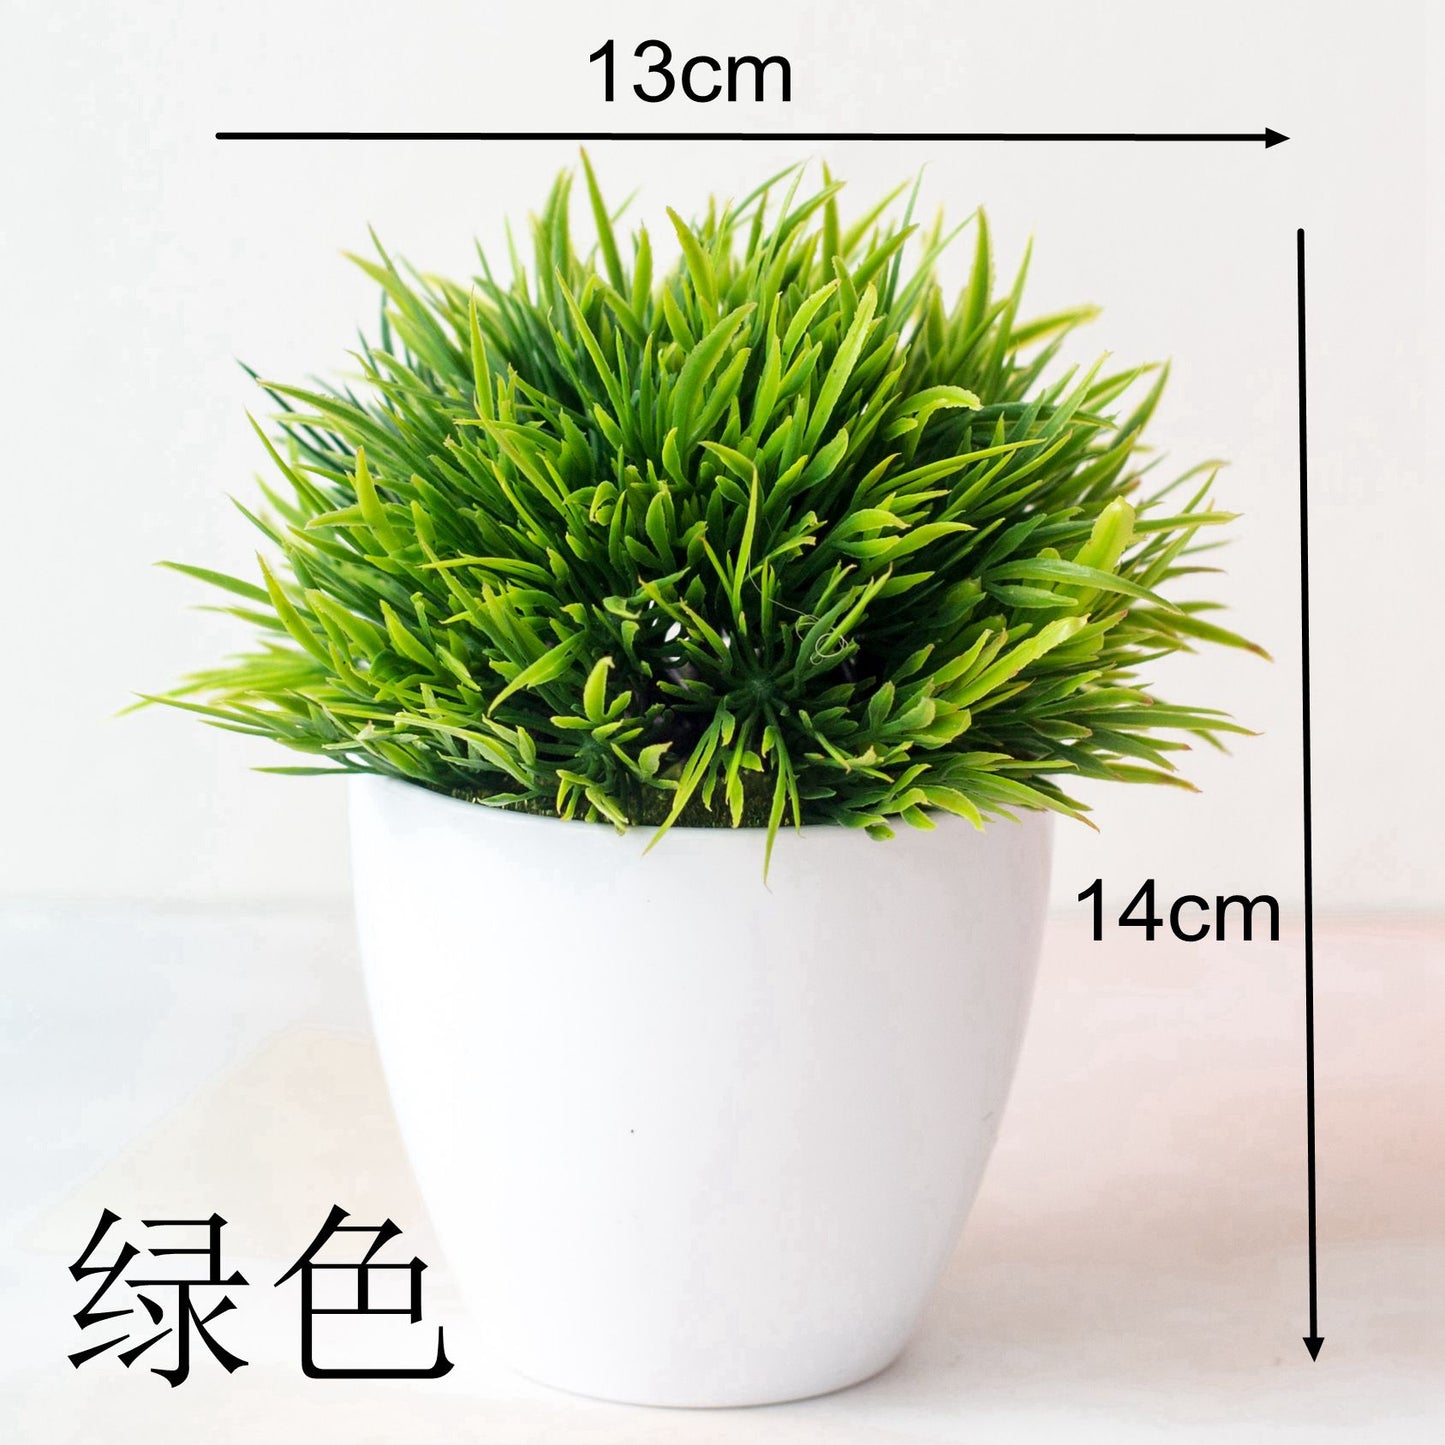 Green Artificial Pine Tree Persian Grass Plants Bonsai